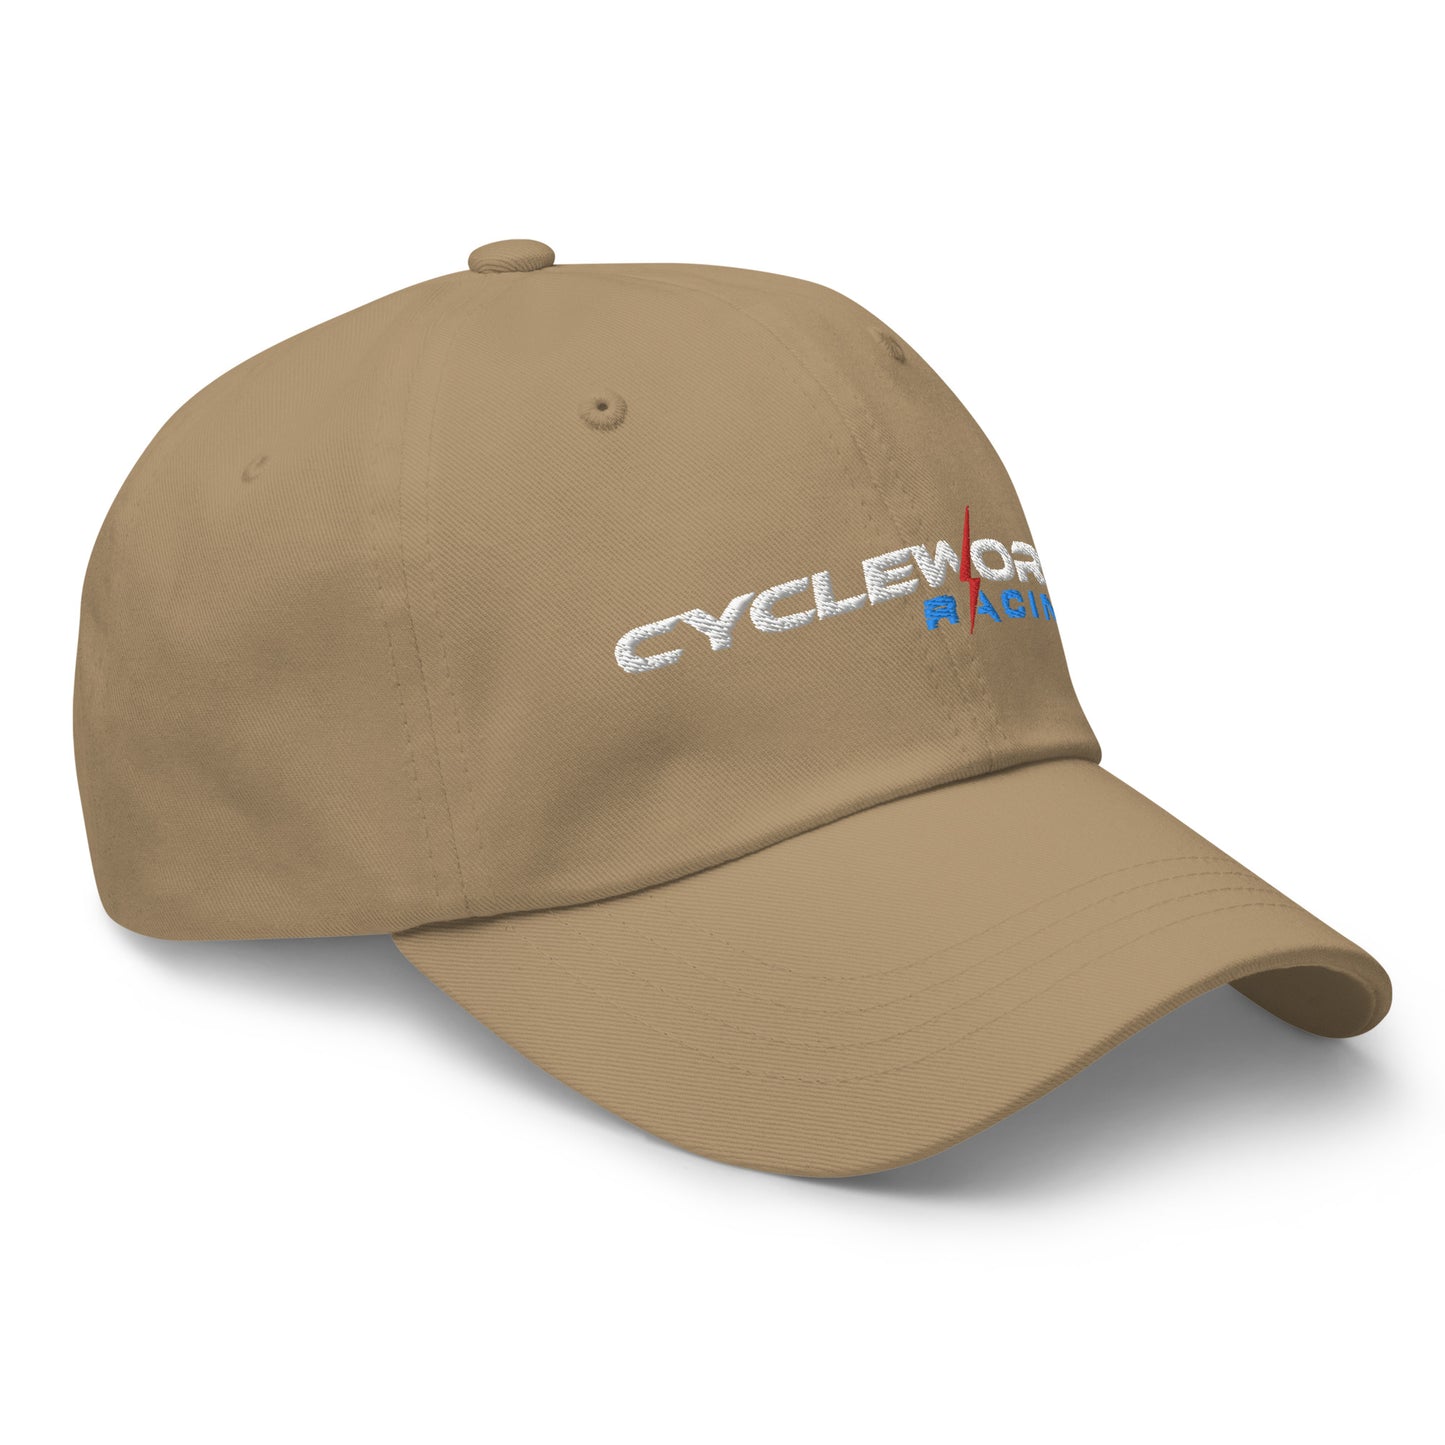 Cycleworx Racing Adjustable Hat